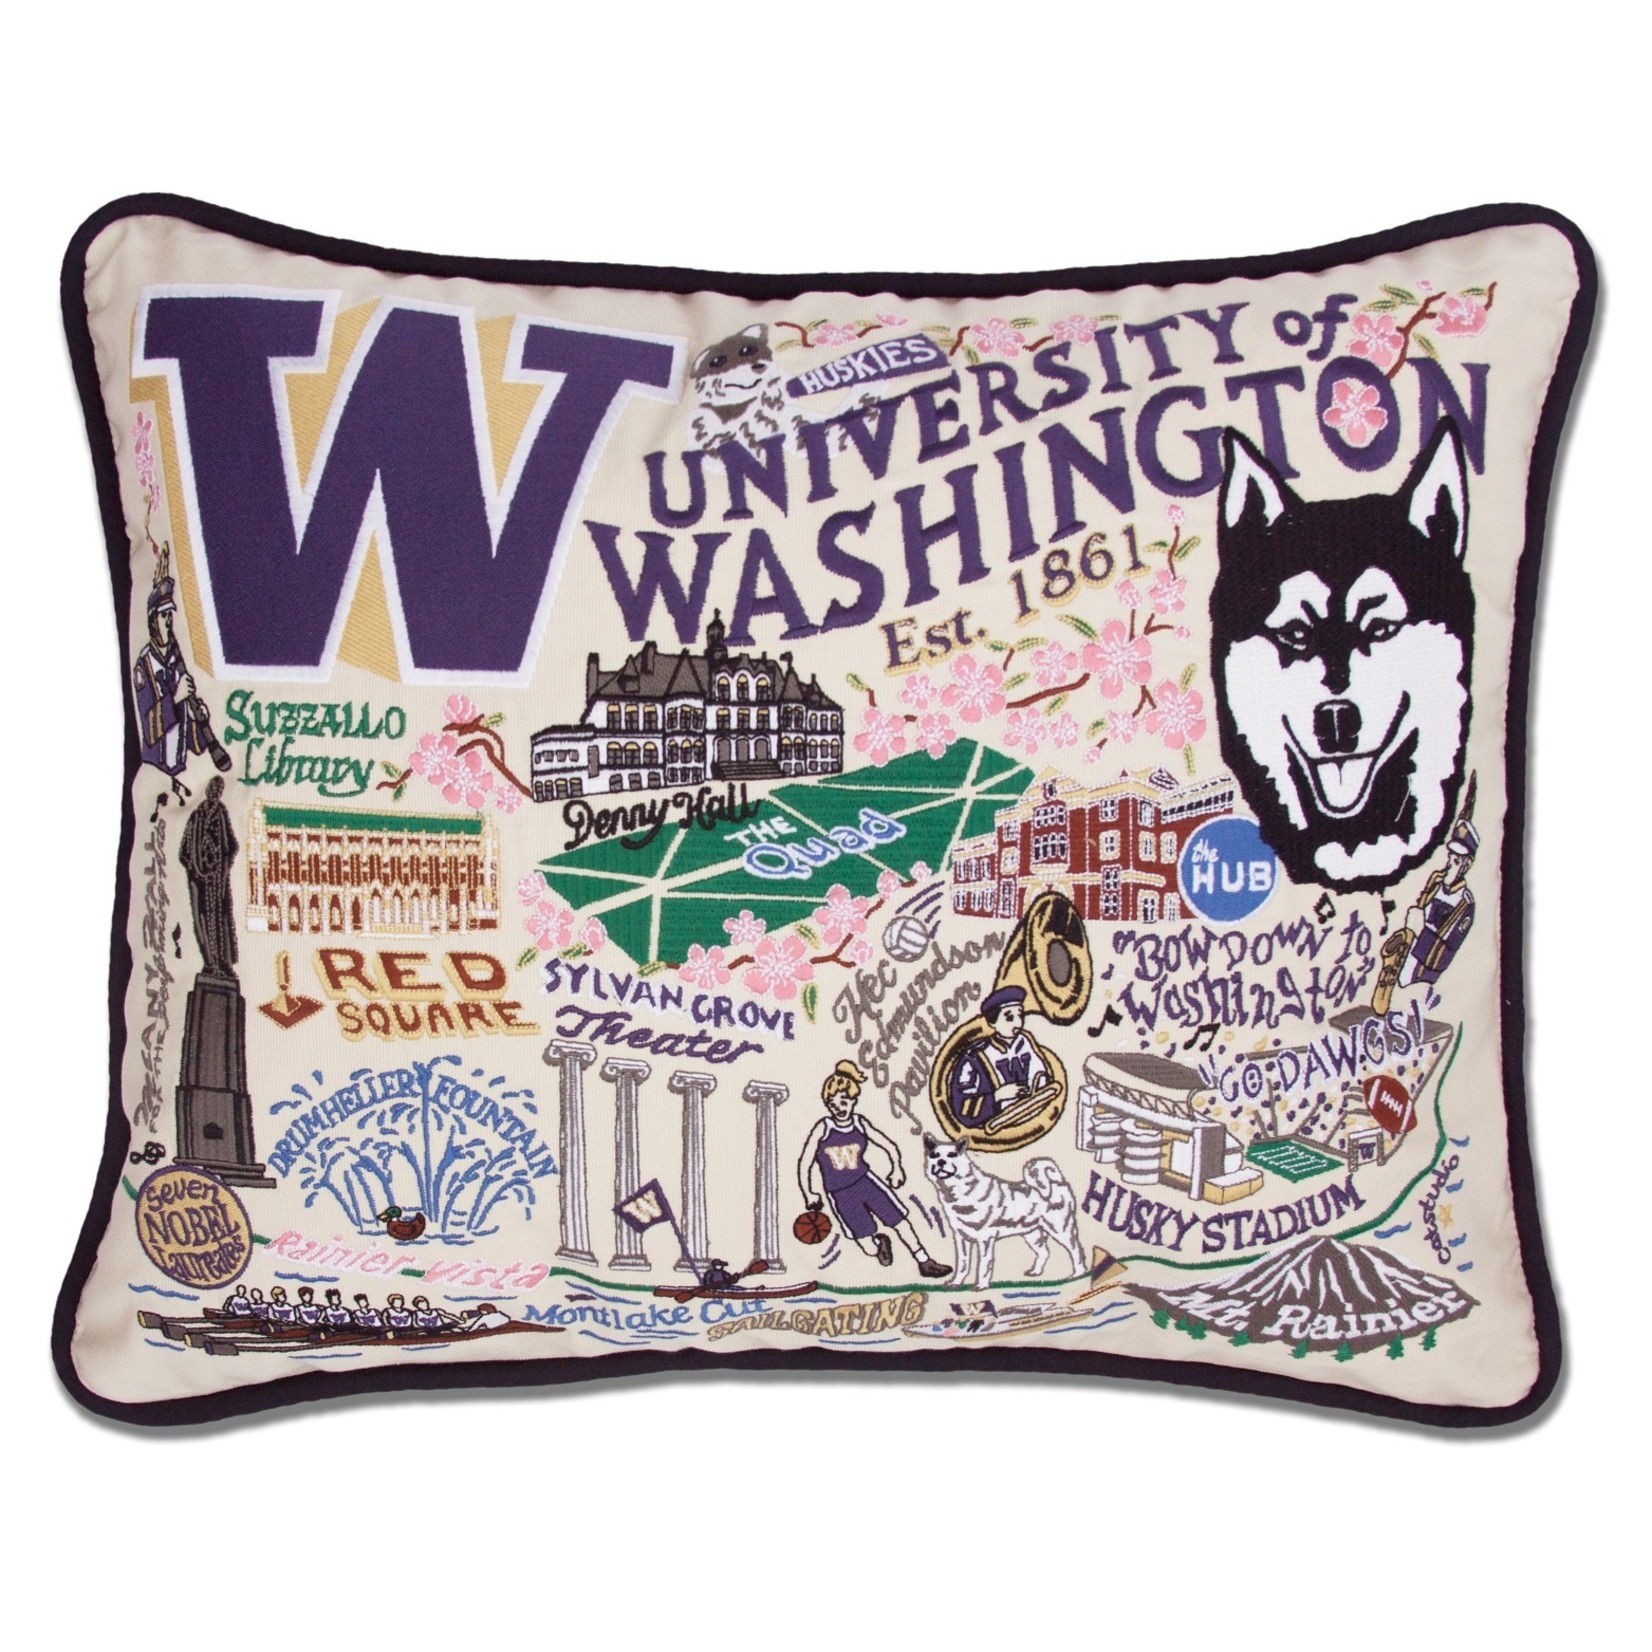 Pillows - Embroidered UNIVERSITY OF WASHINGTON Pillow